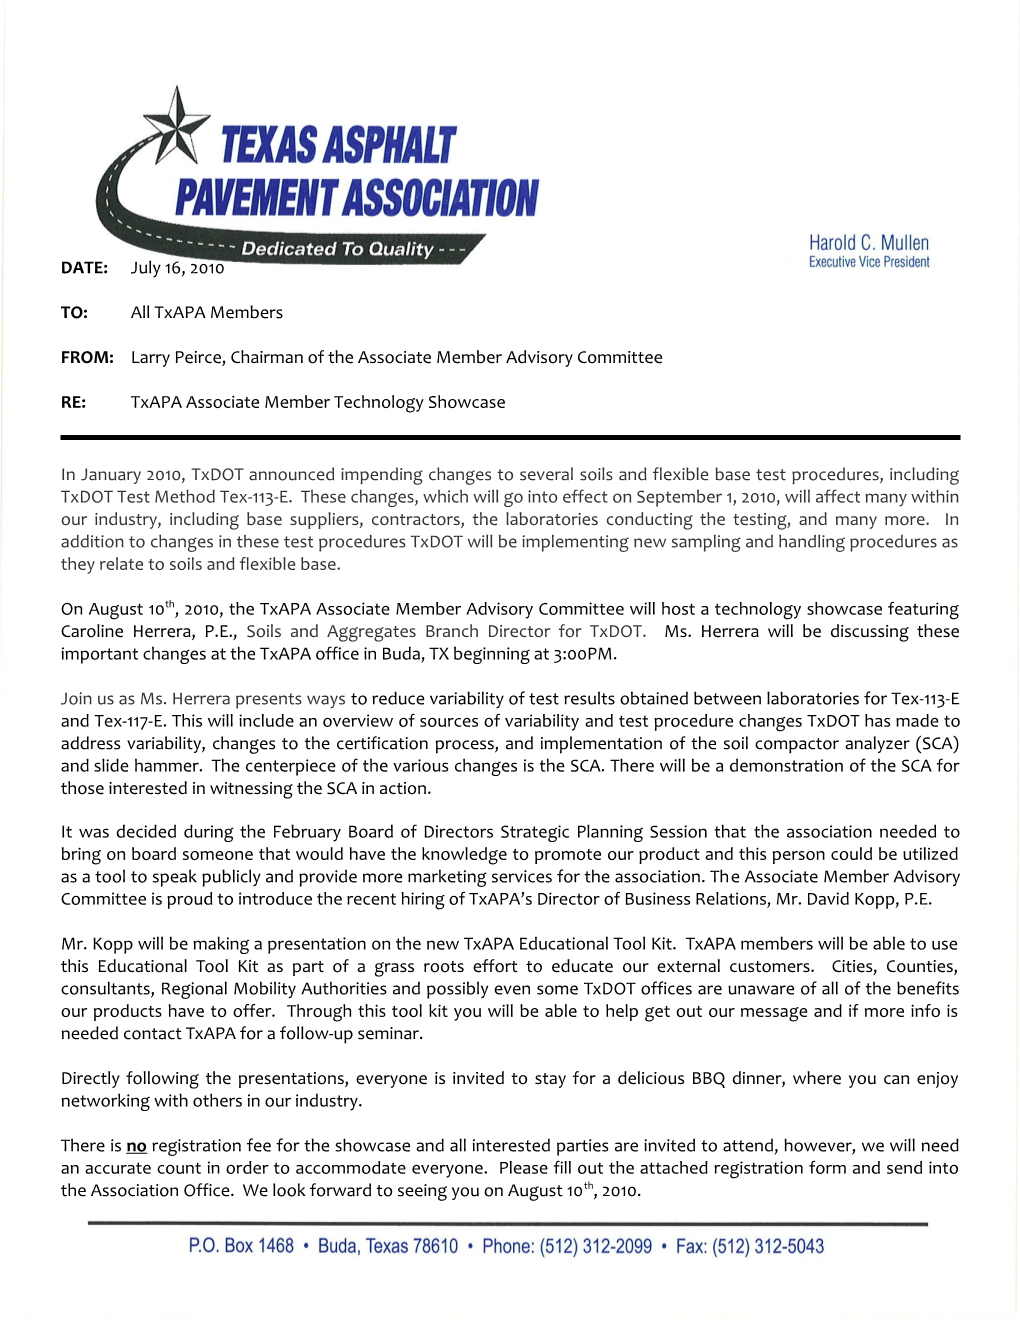 Texas Asphalt Pavement Association s1